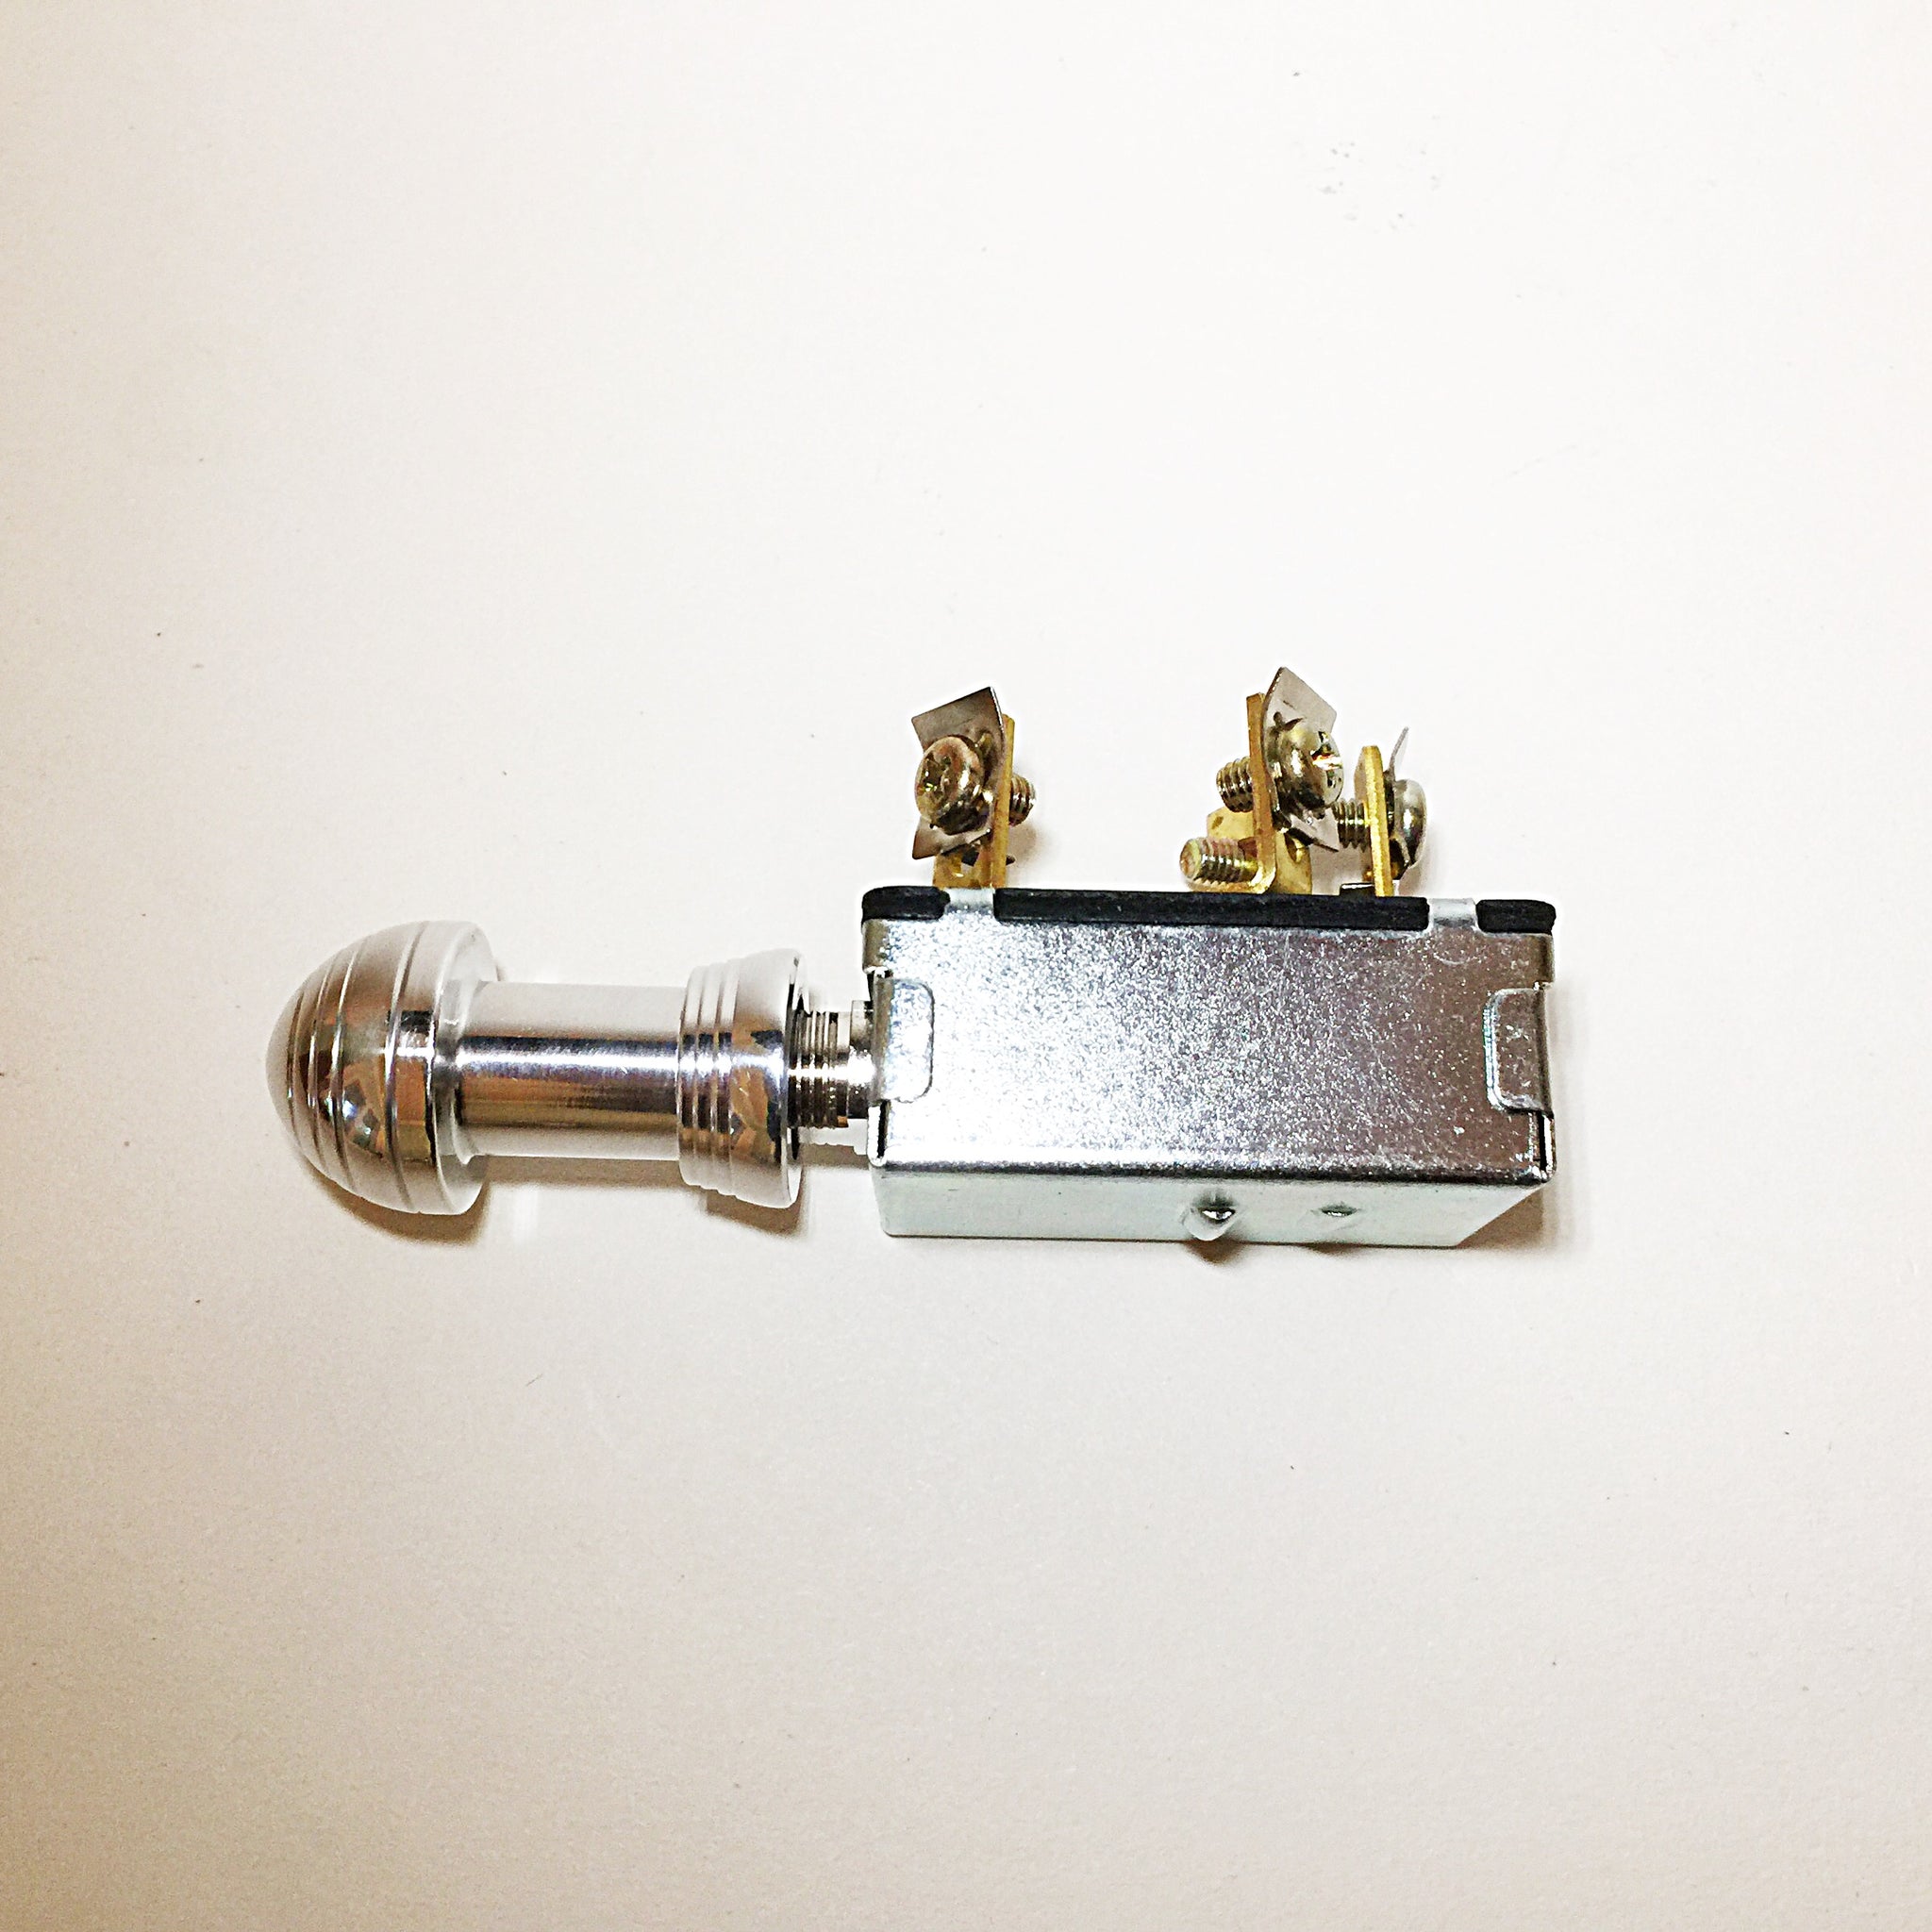 Keyless ignition Switch with Polished 1940's Style Knob & Bezel